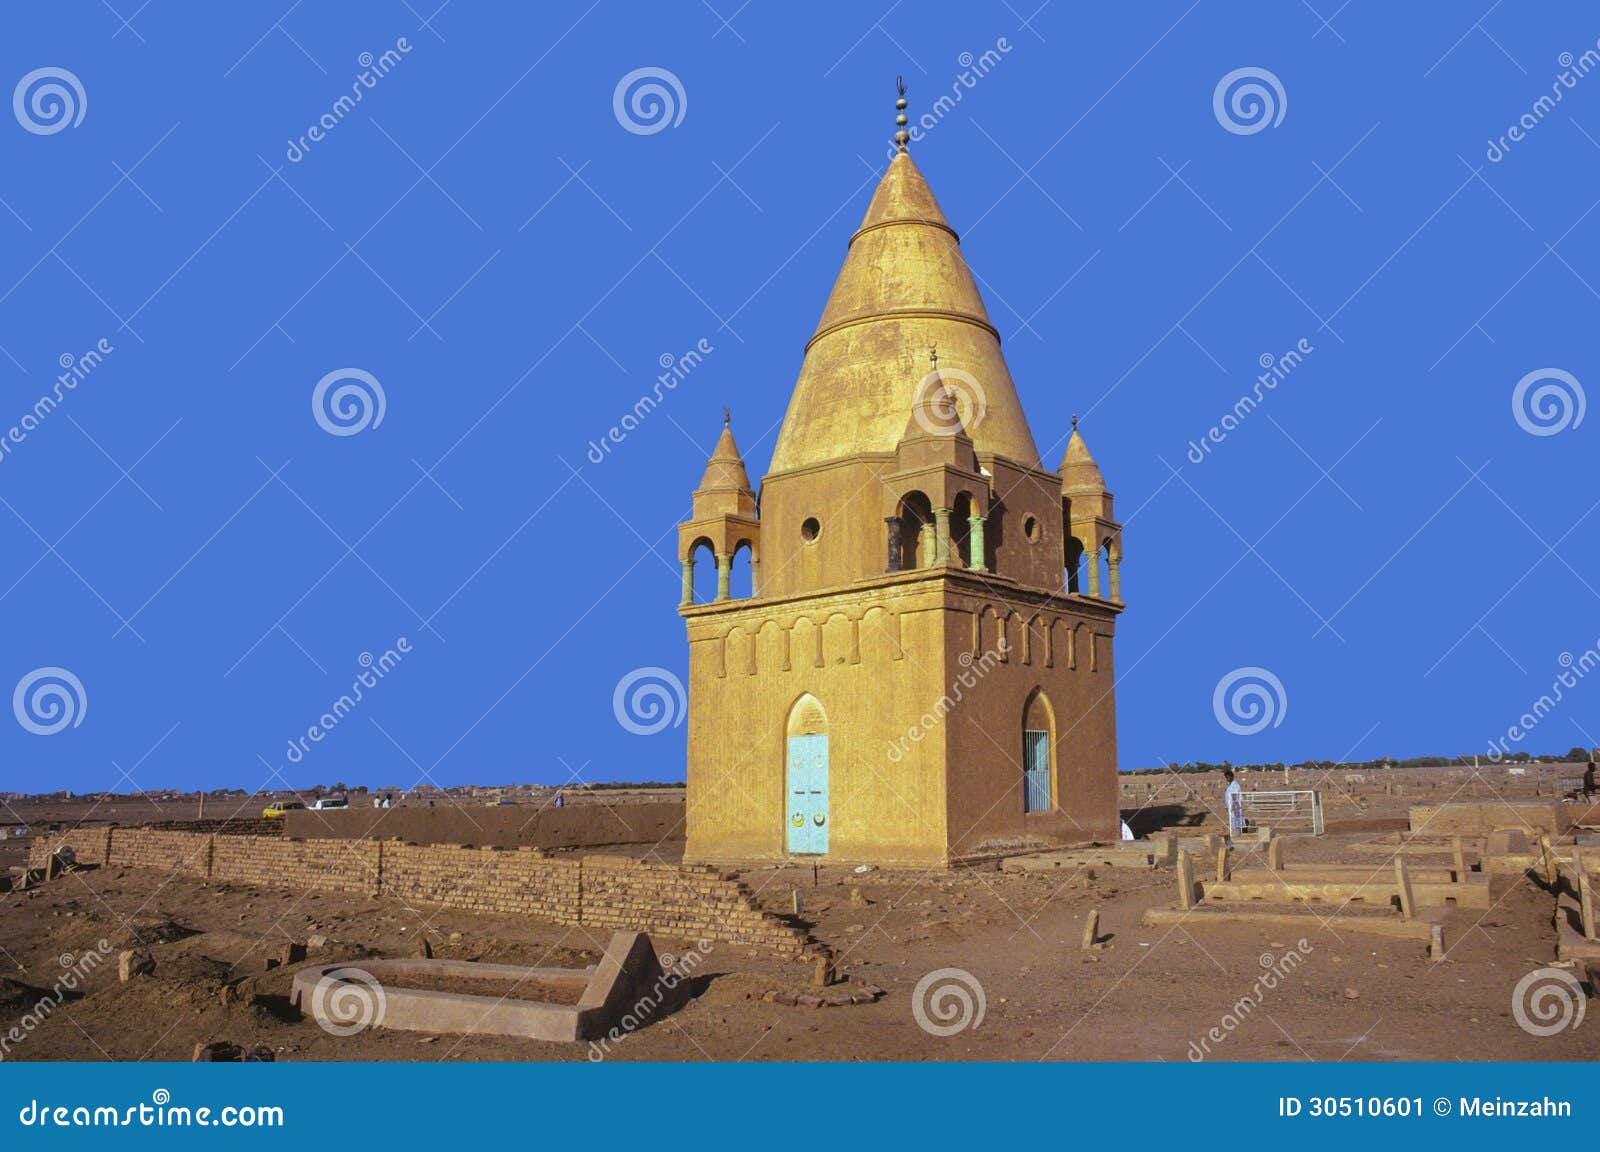 sufi mausoleum in omdurman